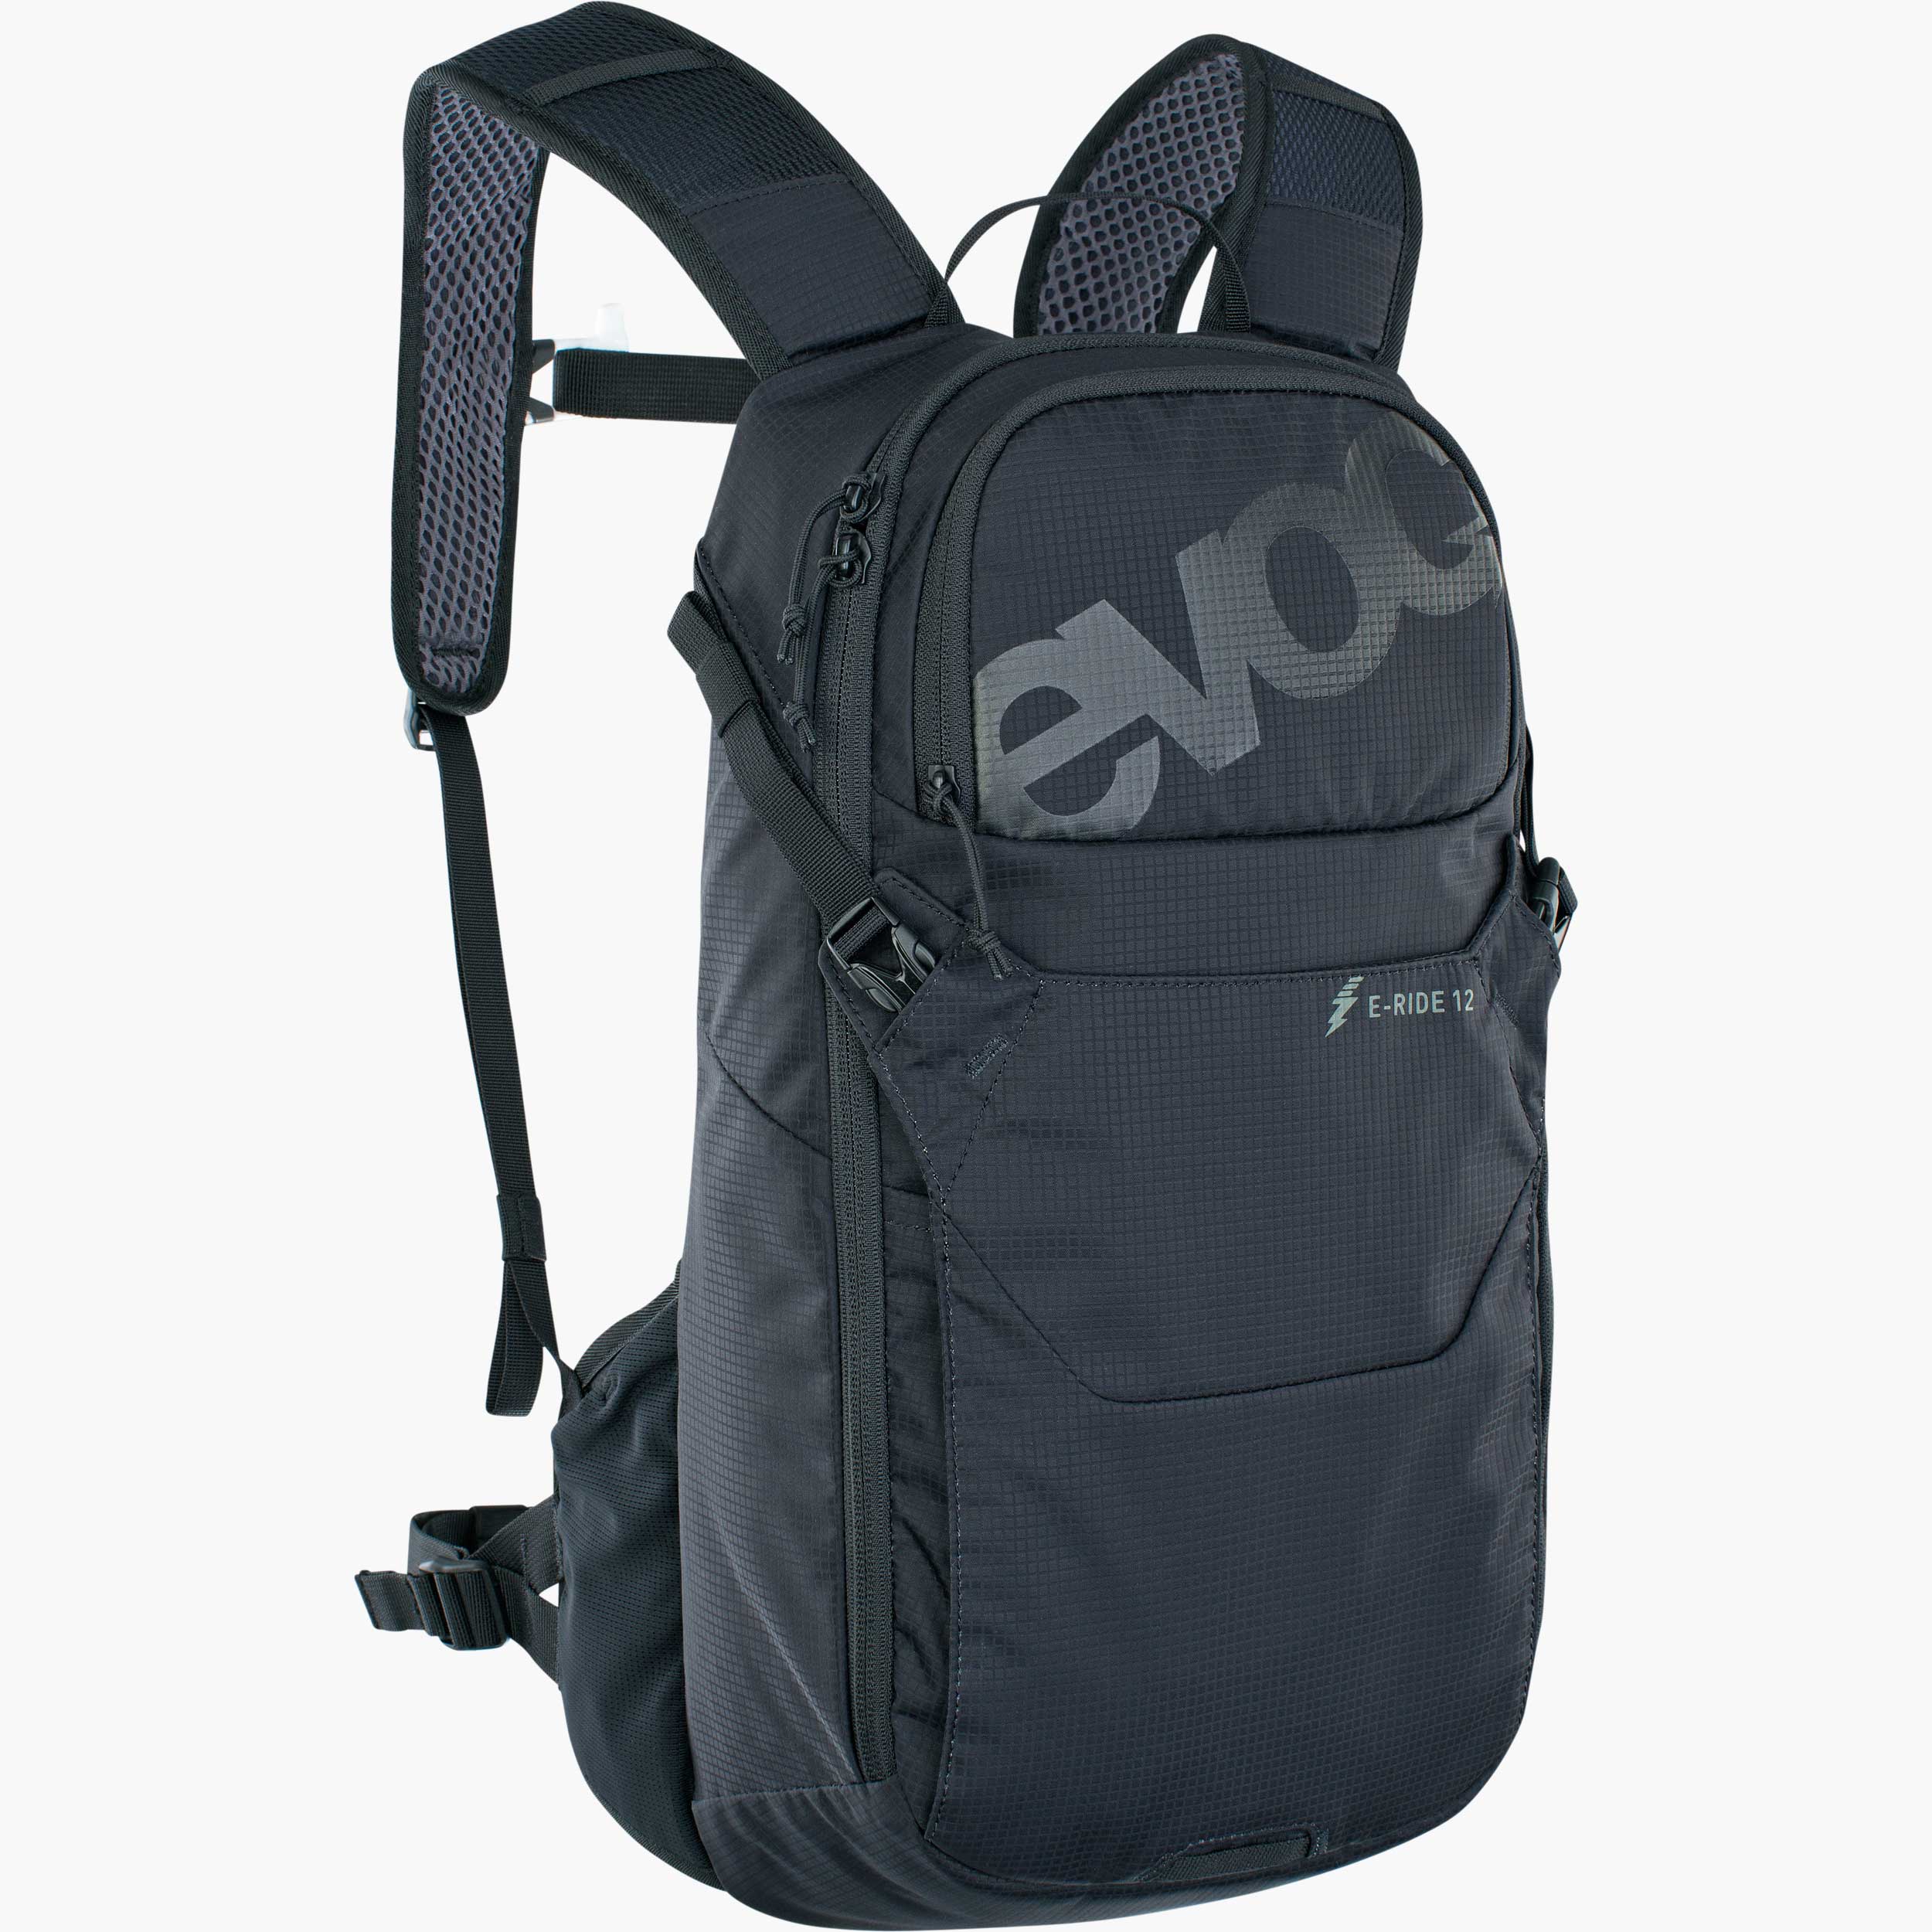 Bike Backpacks Home - Backpacks, Bags, Protection Wear - EVOC - PROTECTIVE SPORTS PACKS